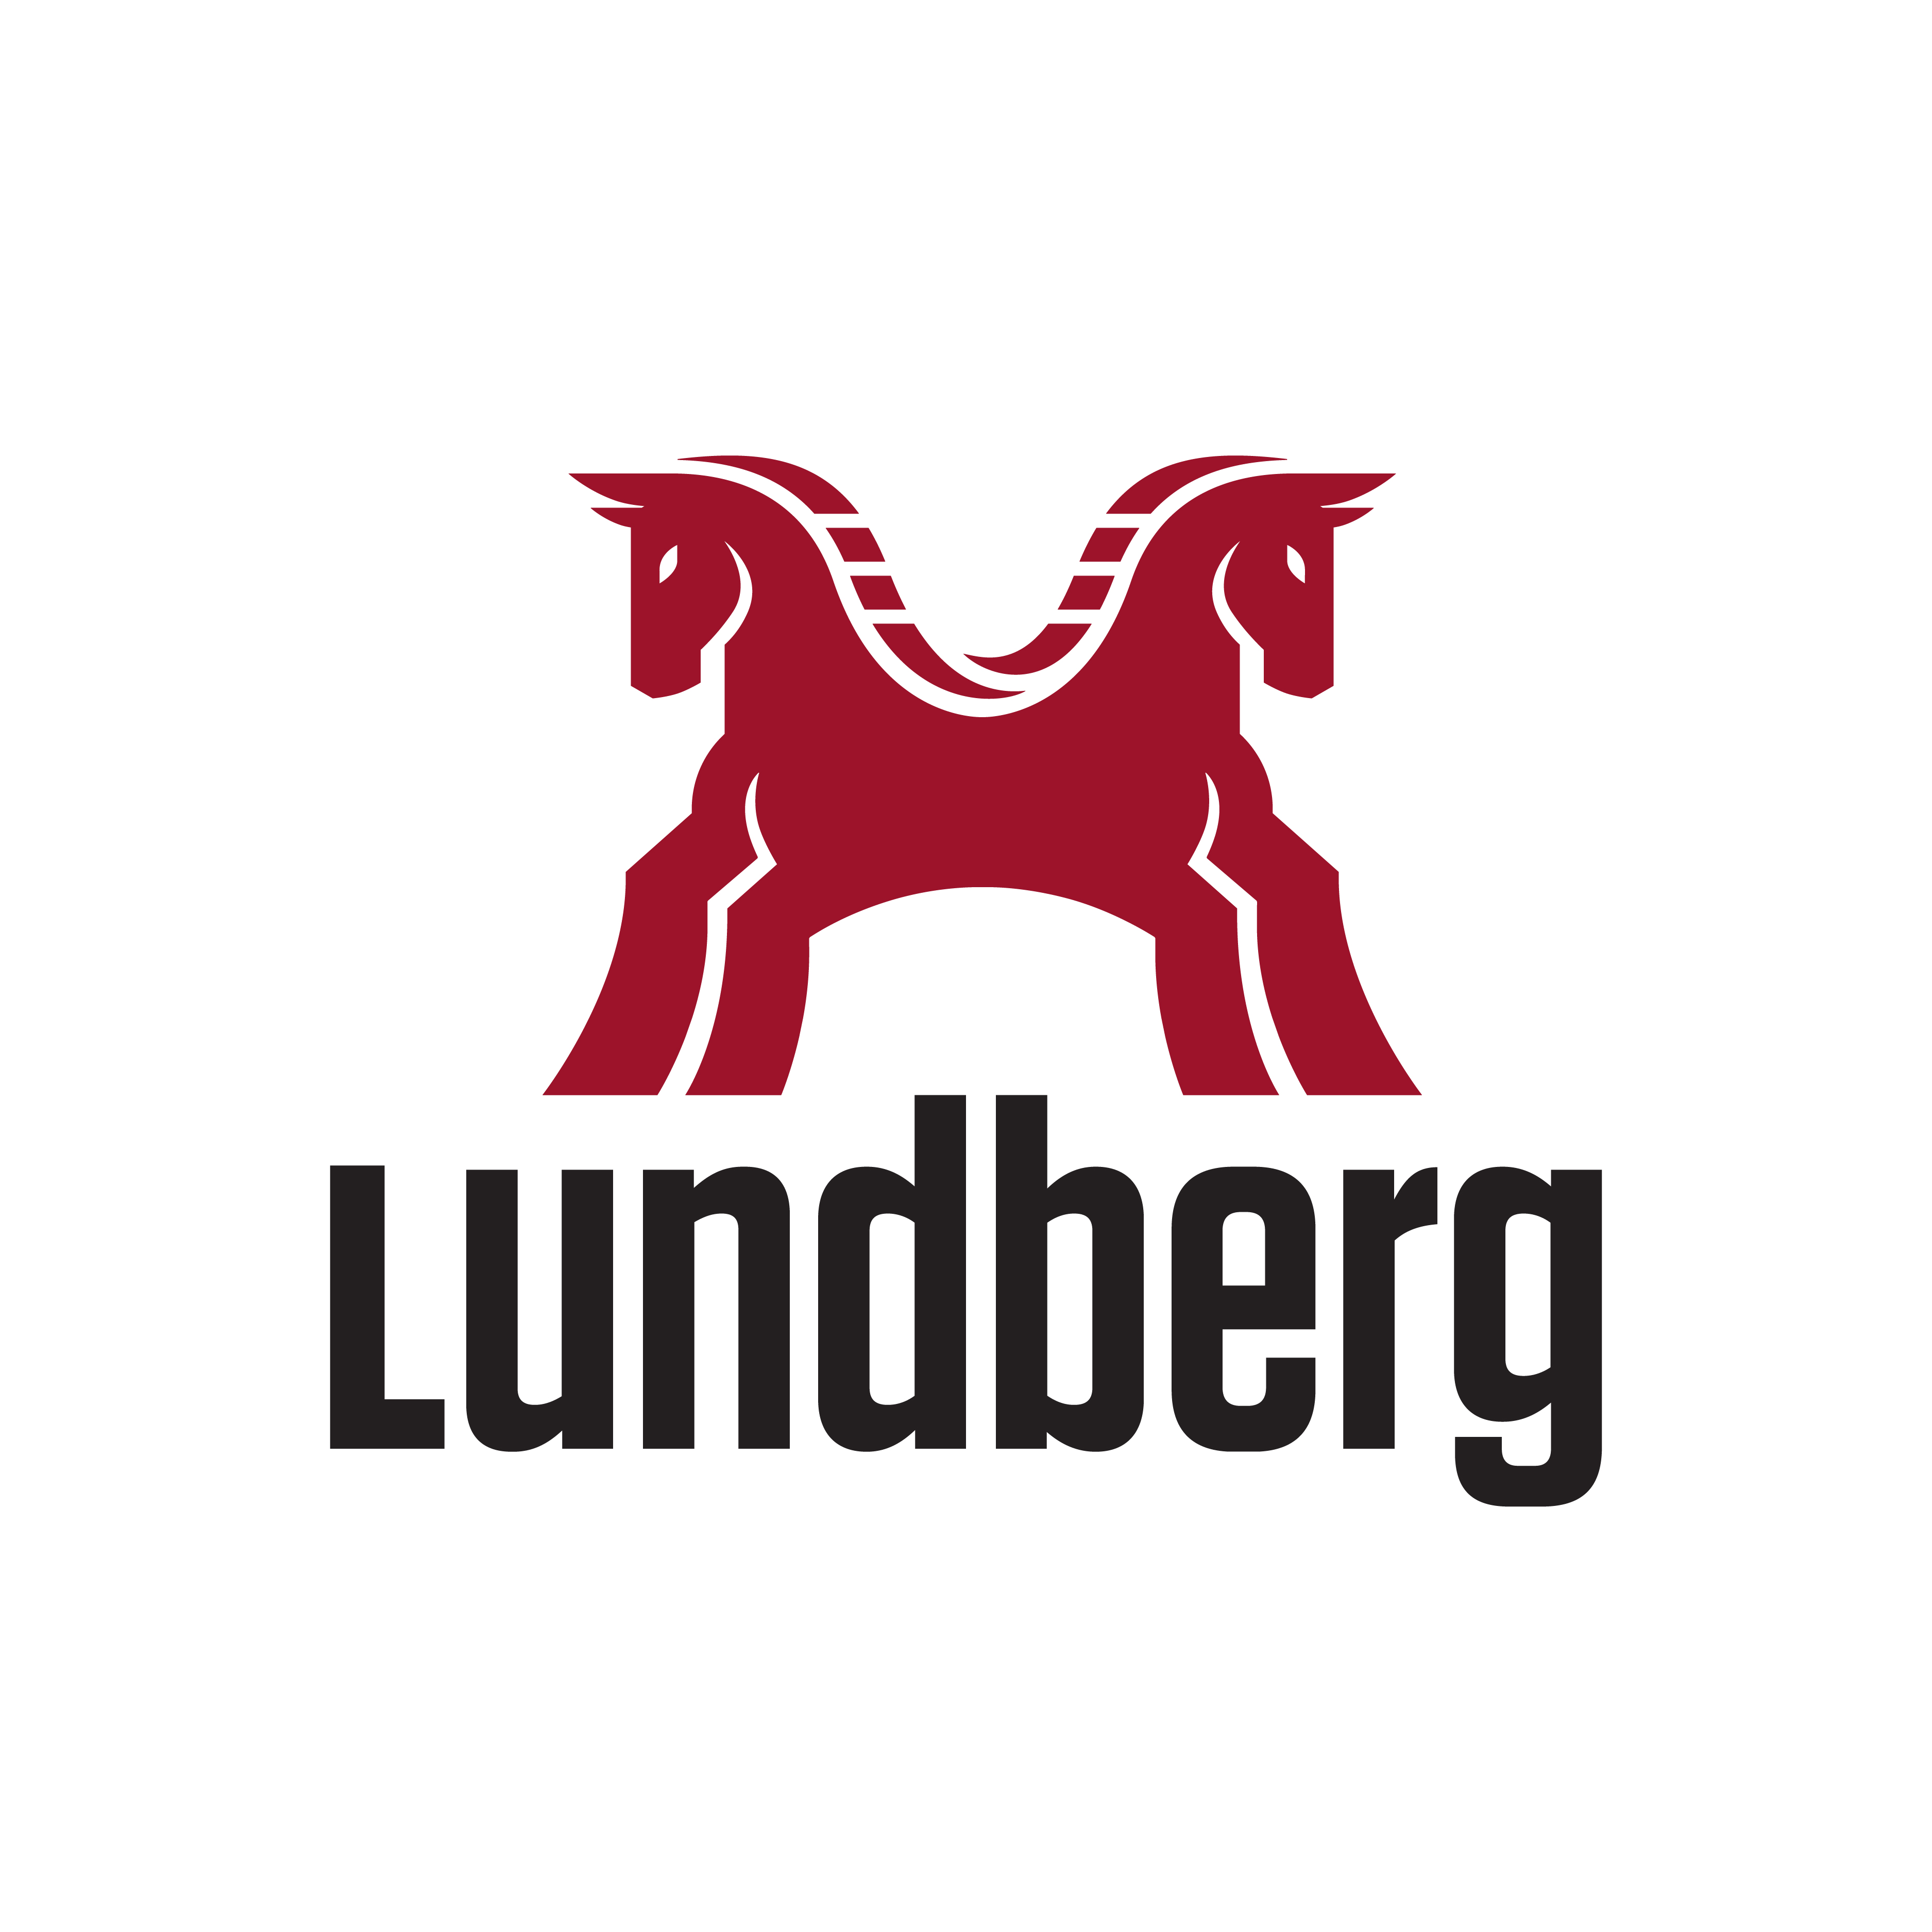 Lundberg Industrial Arts logo design by logo designer Menges Design for your inspiration and for the worlds largest logo competition